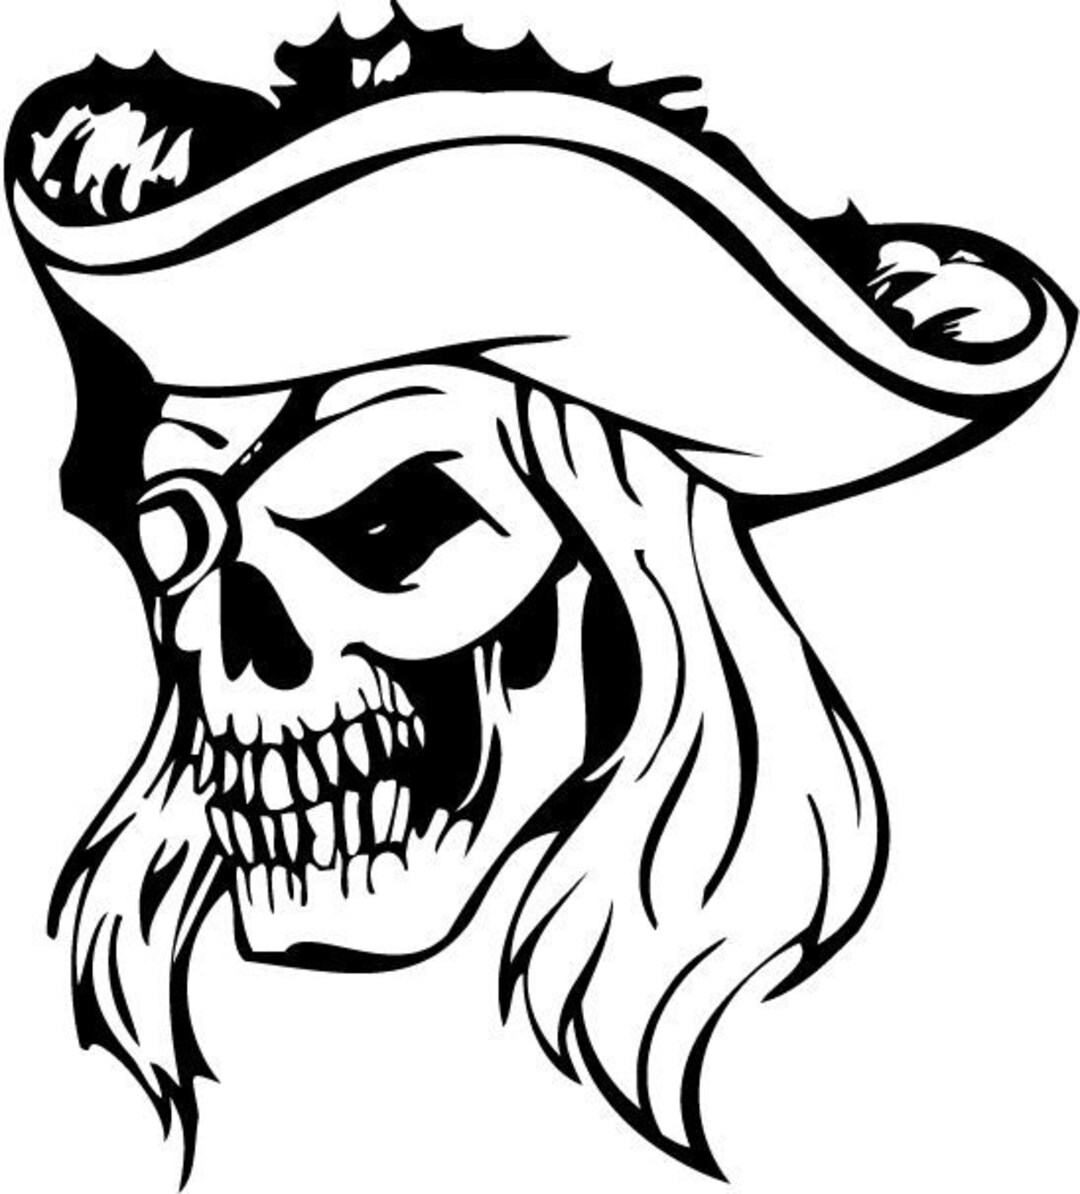 Piraten Totenkopf Aufkleber Klassik von Klebe-X jetzt Online bestellen!